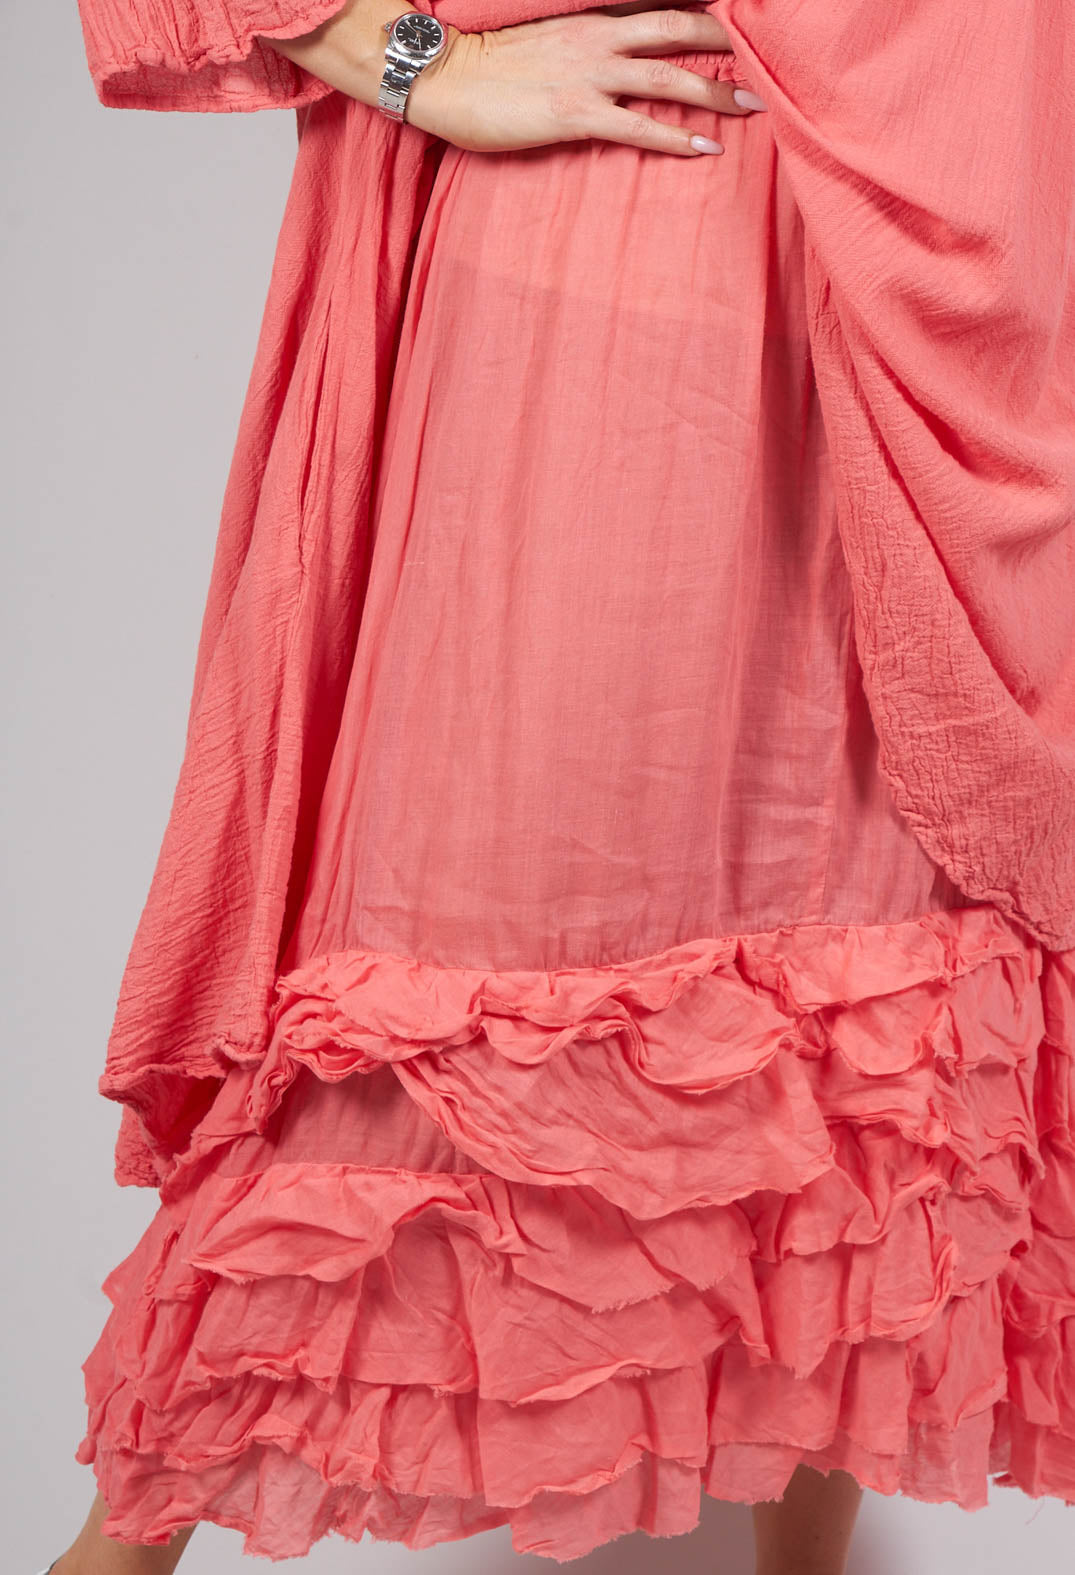 Bakstraps Skirt in Nektar Pink